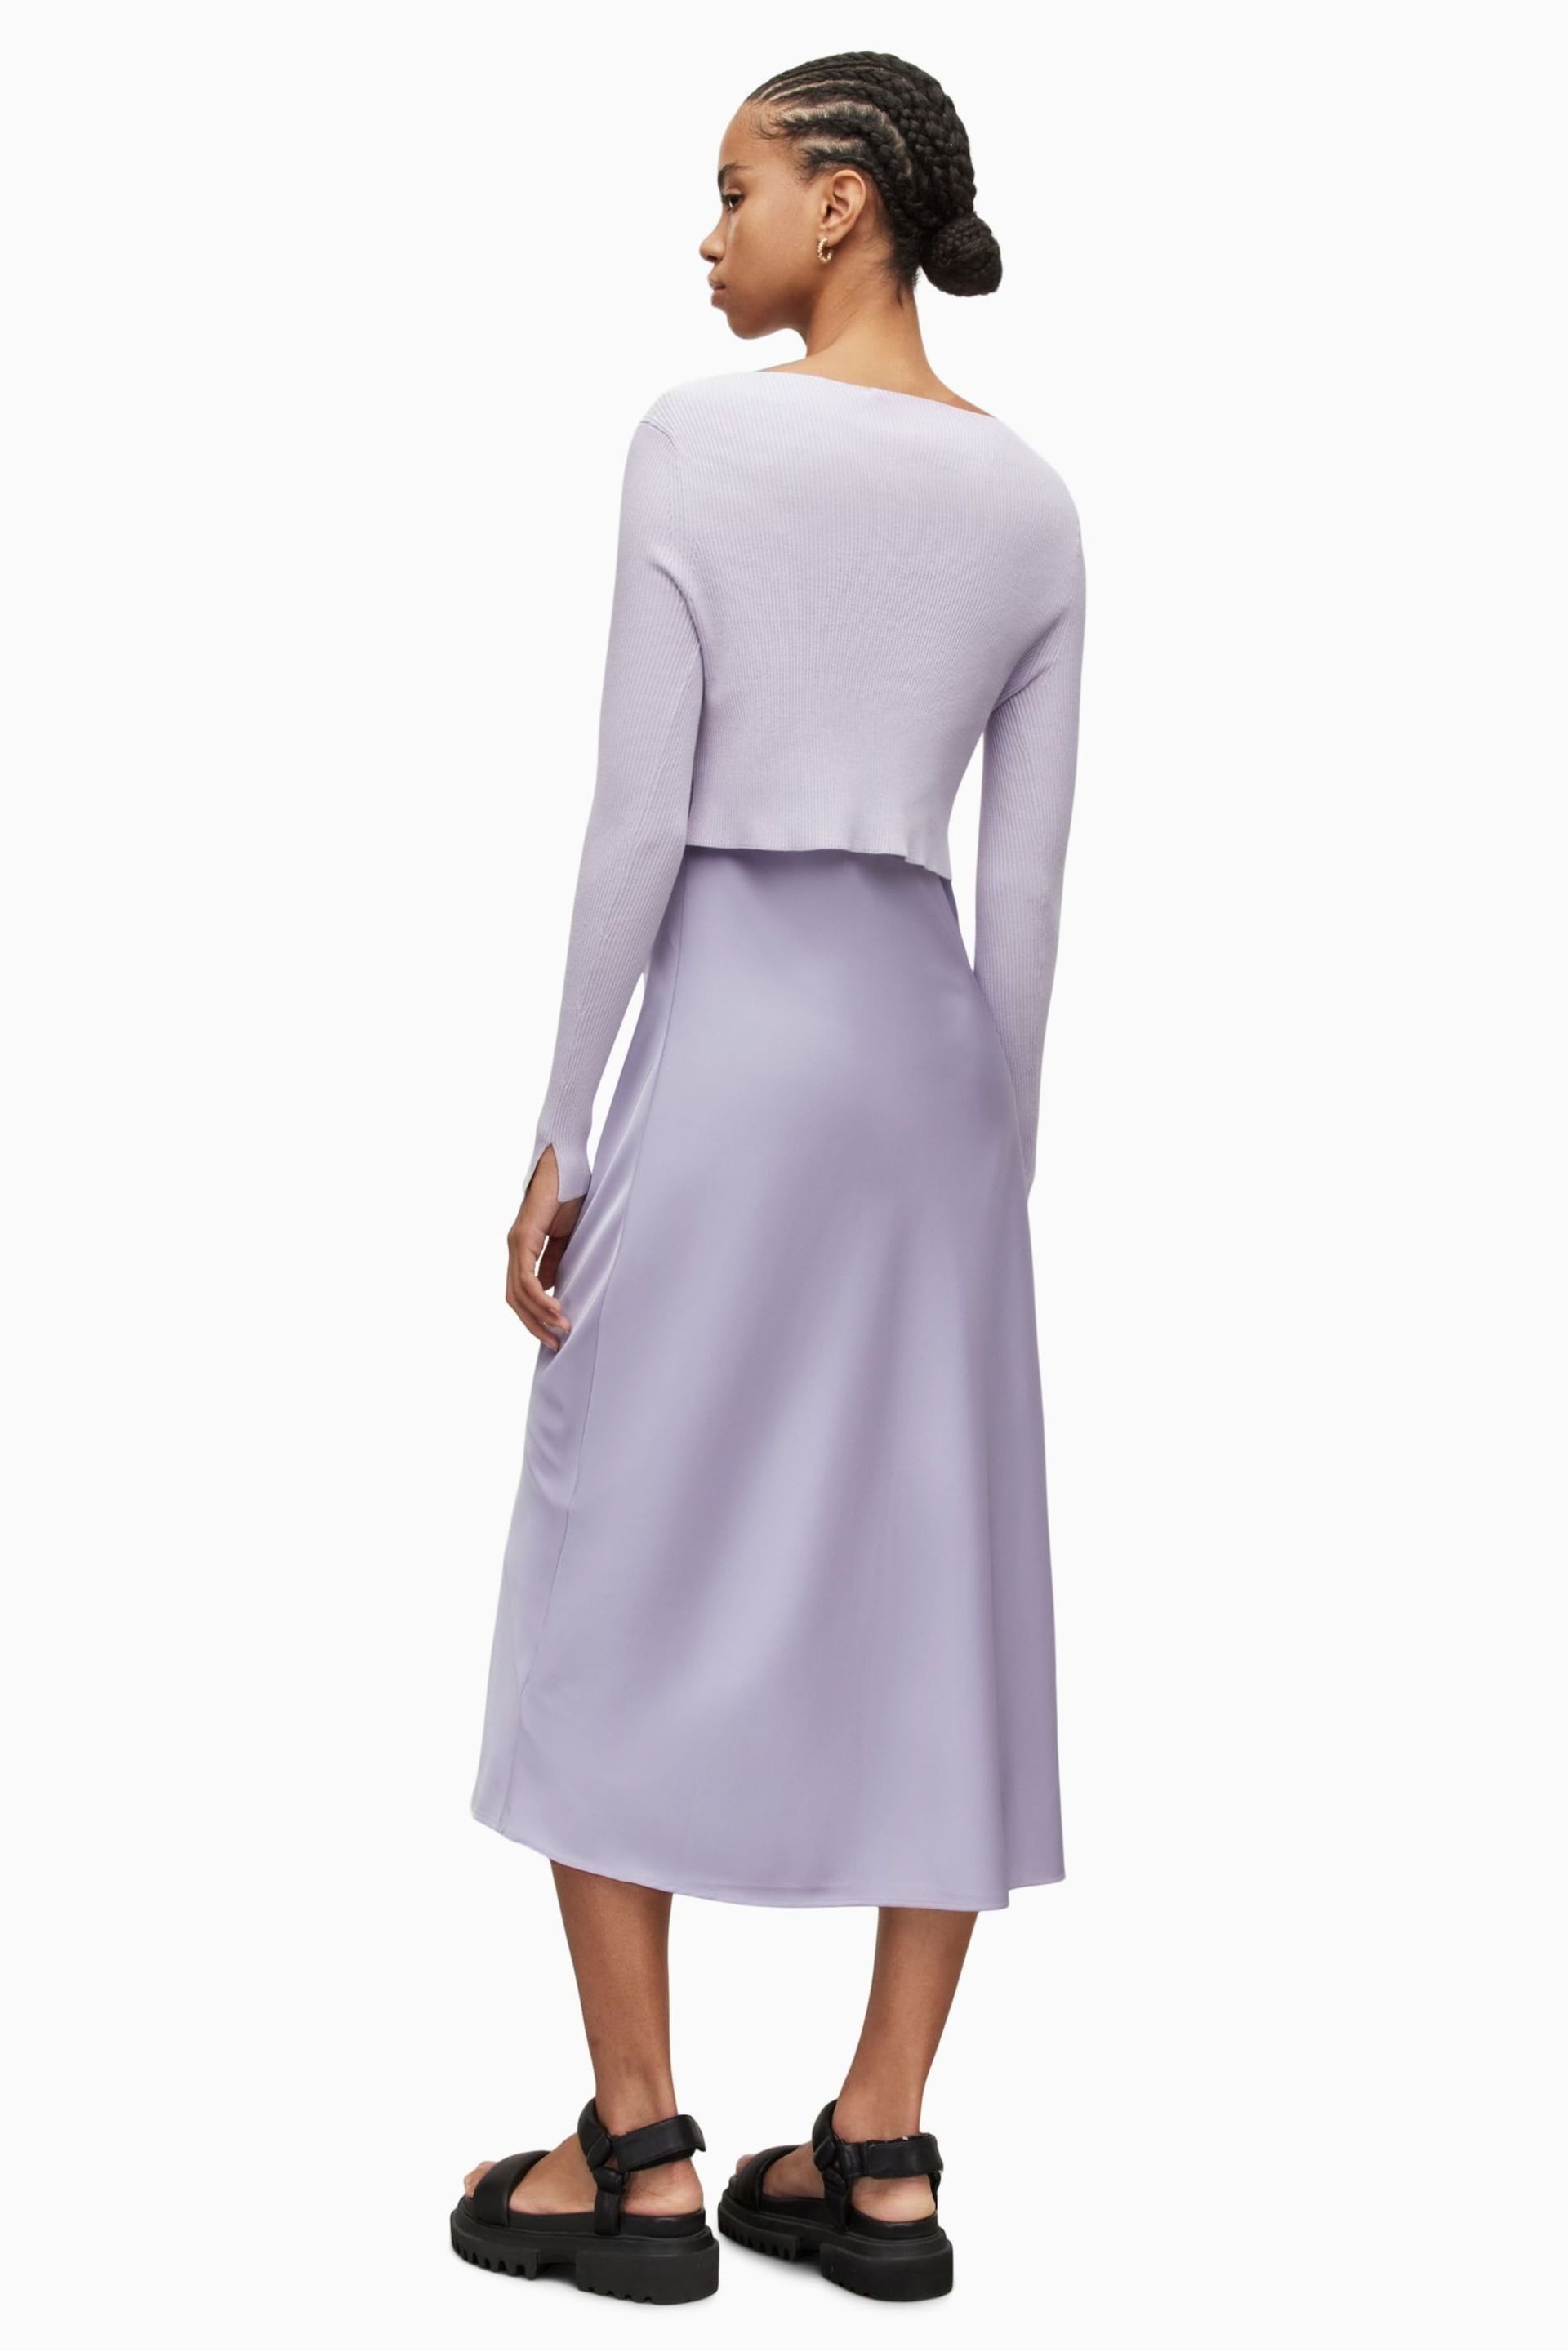 AllSaints Purple Hera Dress - Image 2 of 7